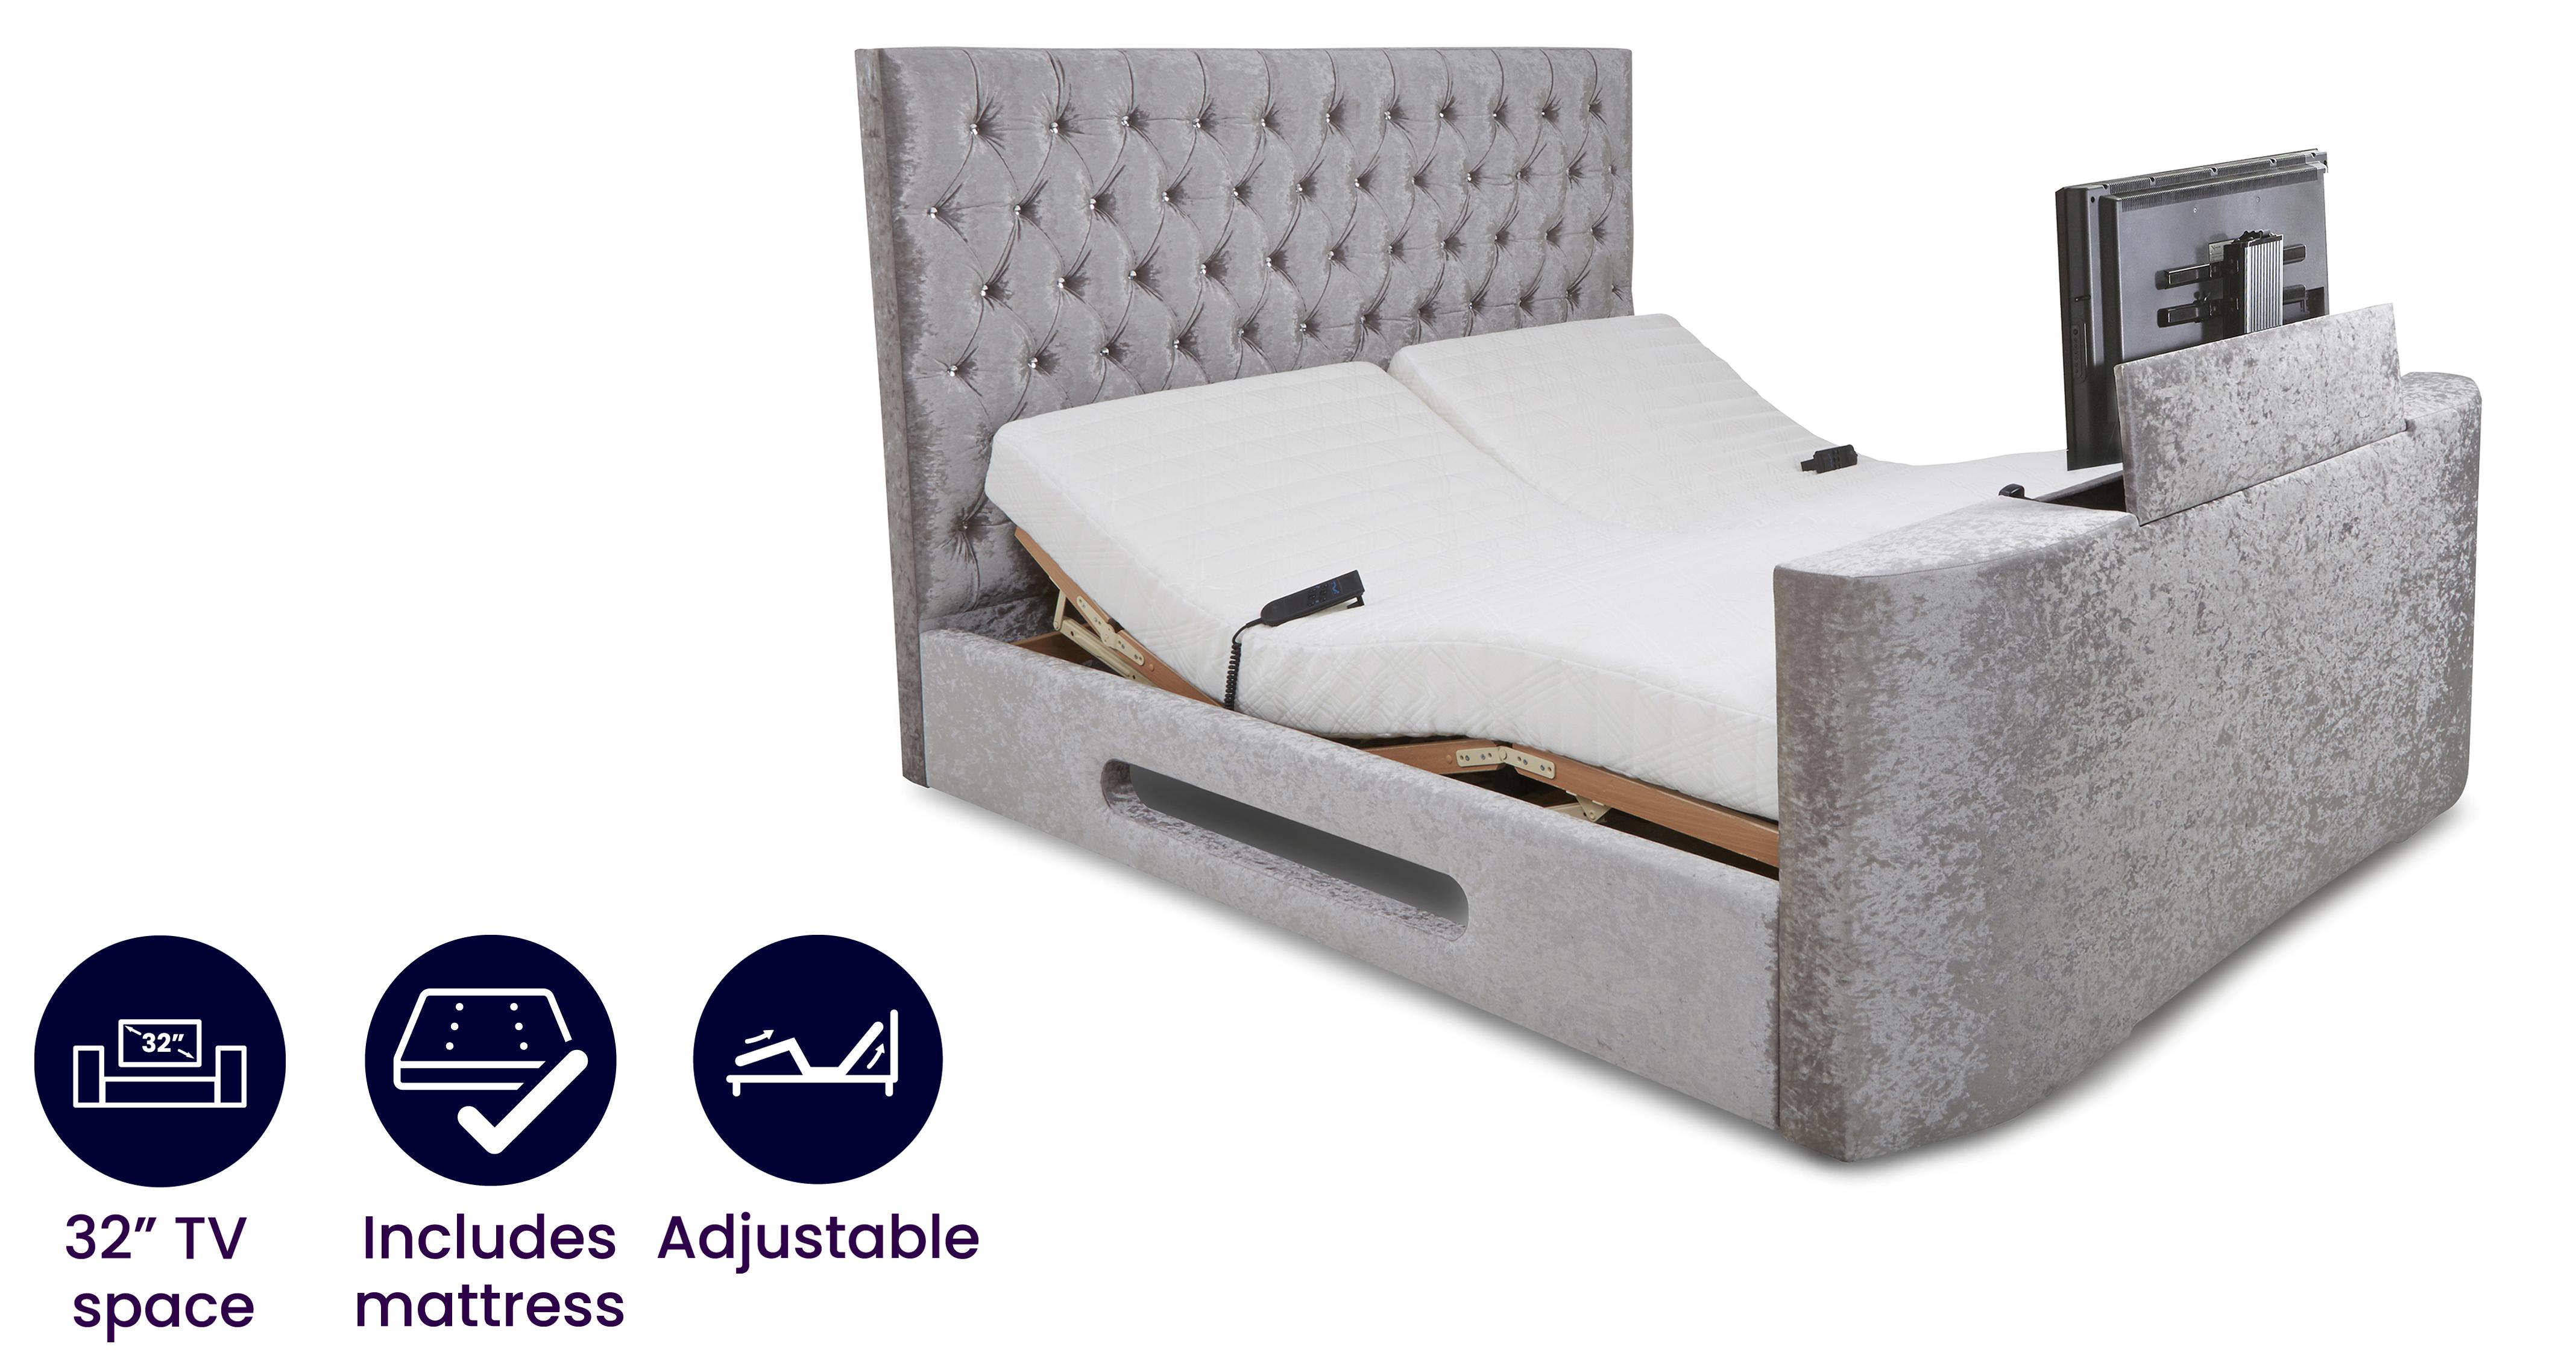 Impulse King Adjustable Tv Bed, King Bed Frame With Tv Lift